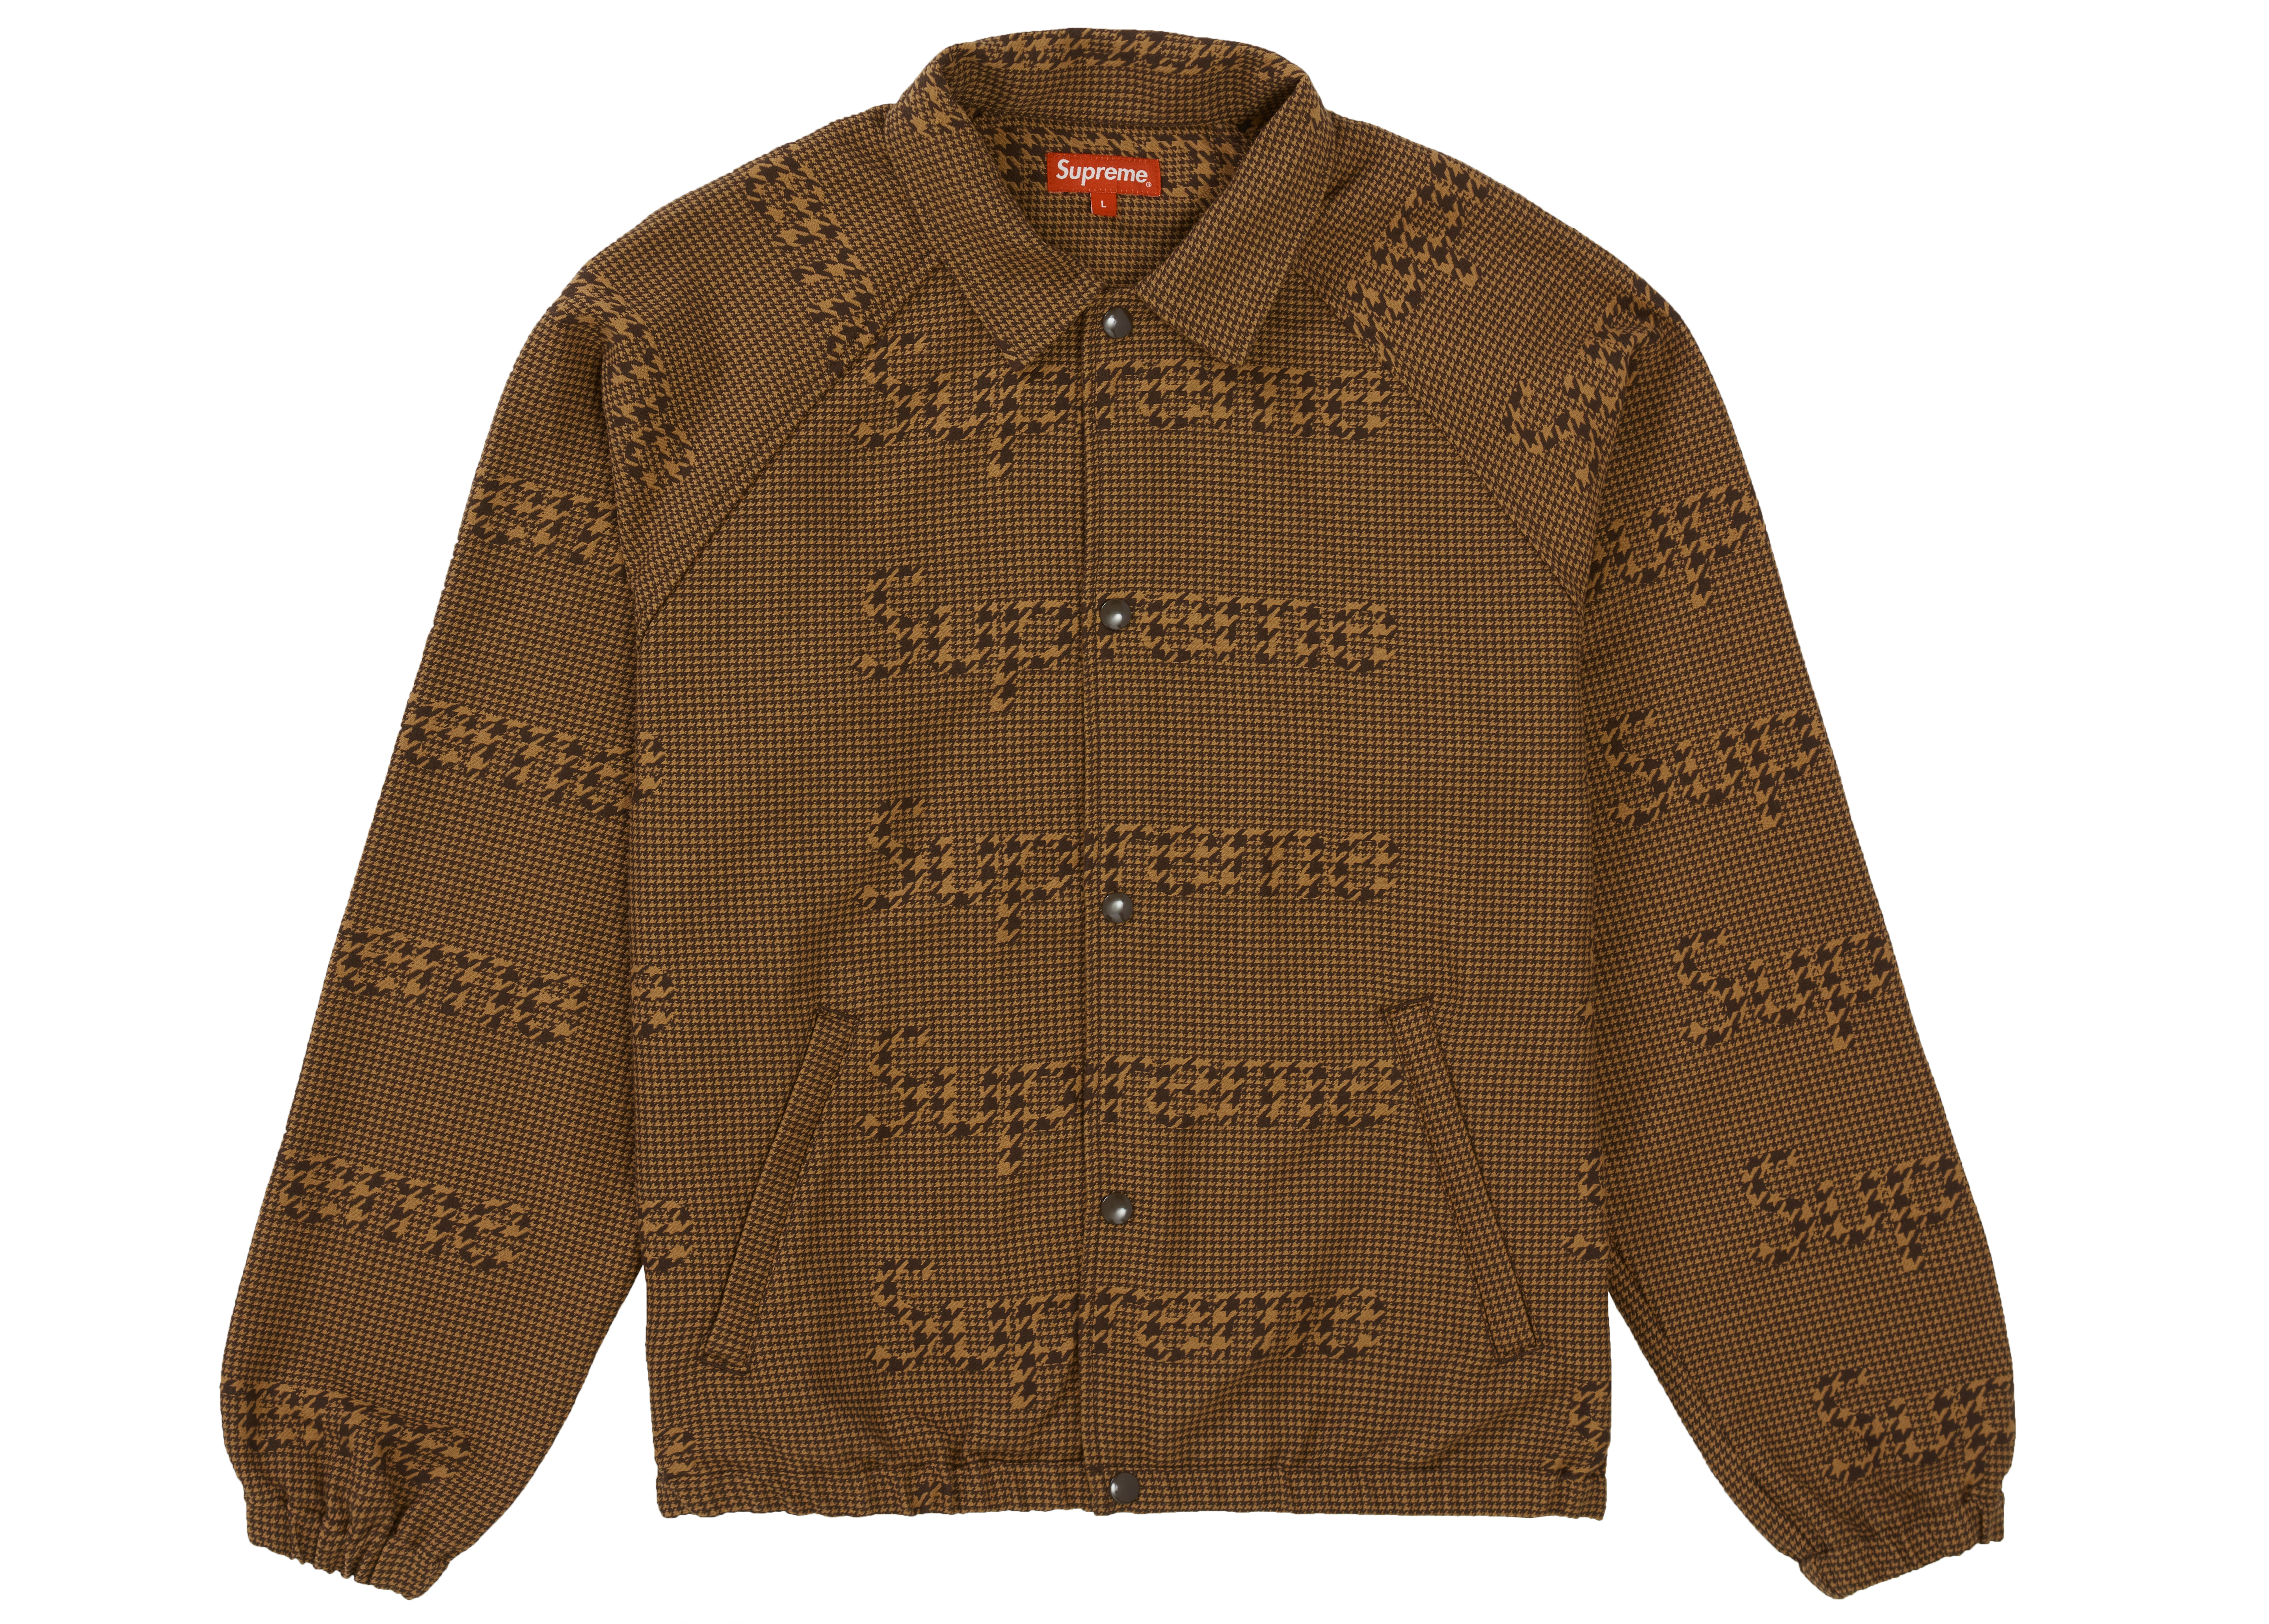 LV-Supreme jacket coat 12009# size:M-3XL, Mr. Chen Blog